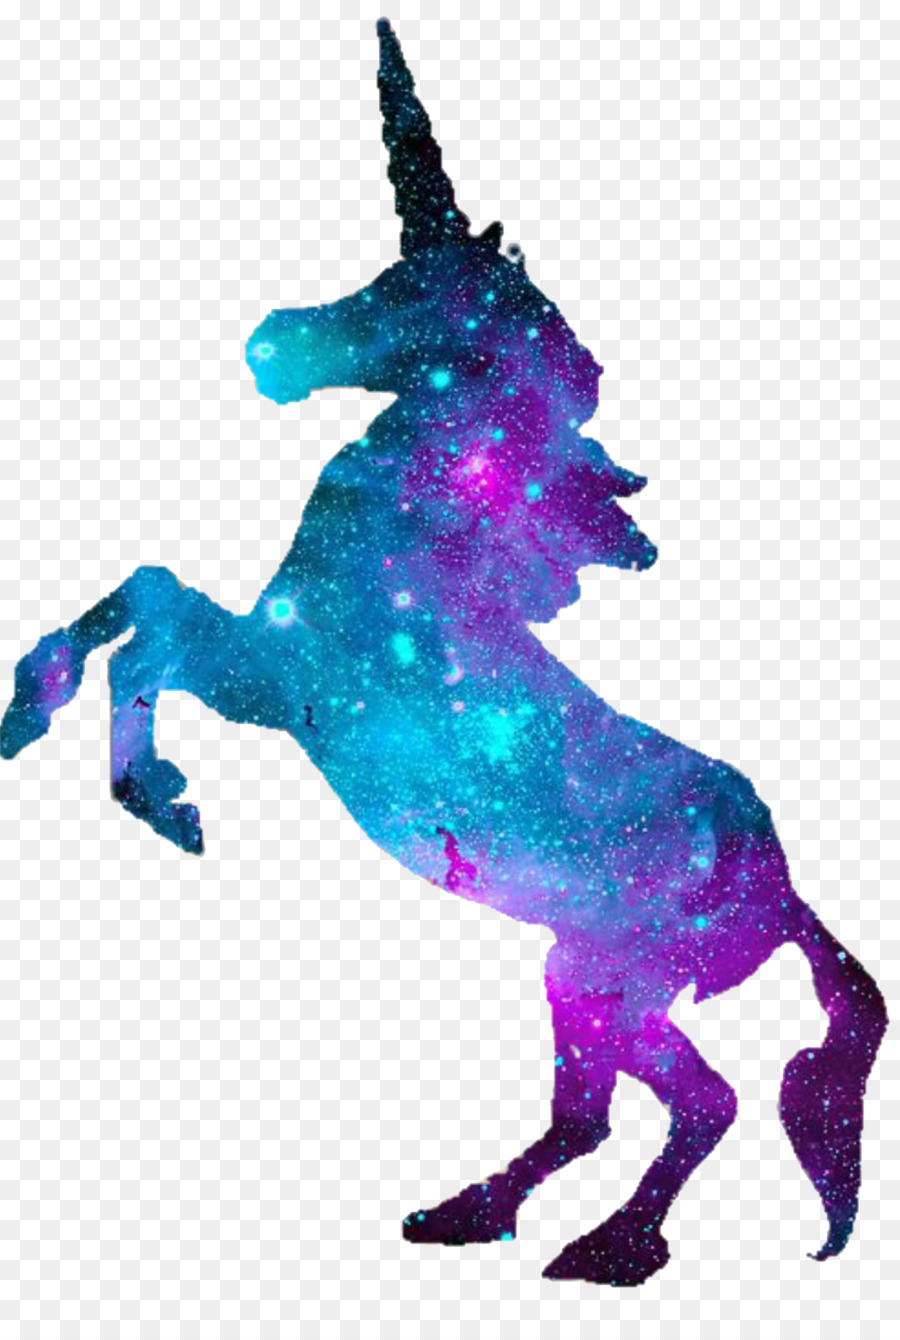 Purple Unicorn Silhouette.